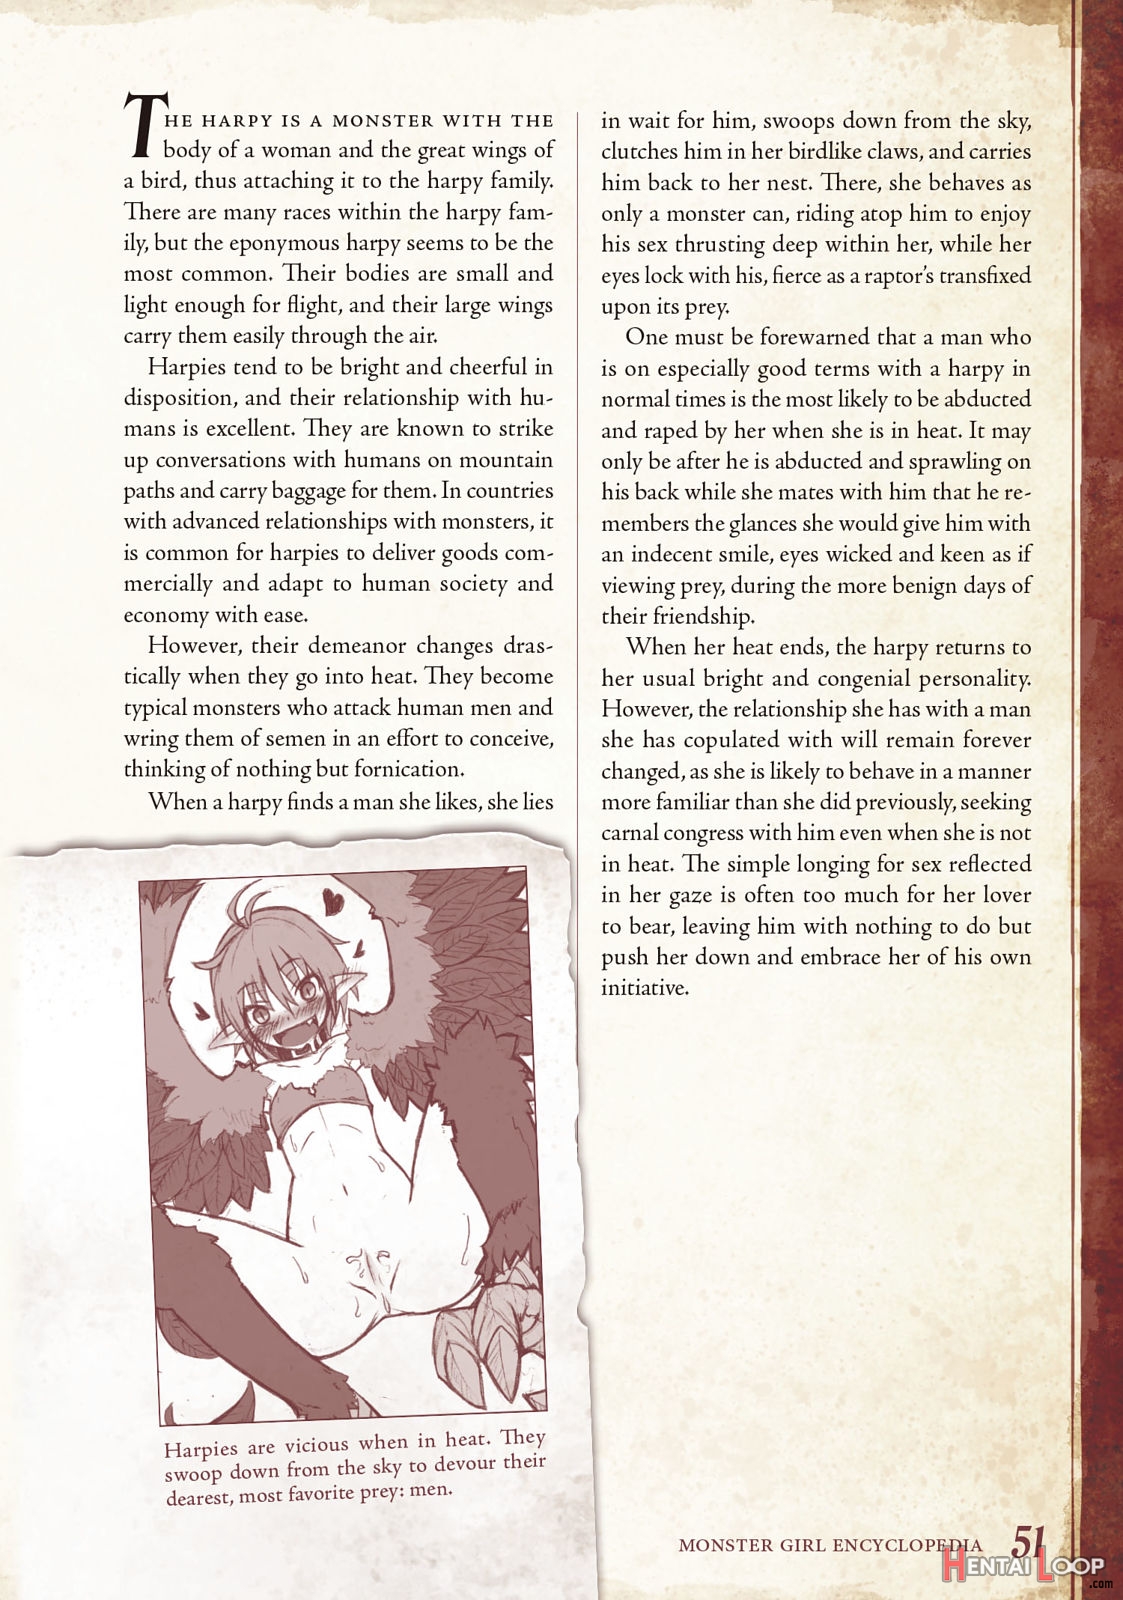 Monster Girl Encyclopedia Vol. 1 page 52